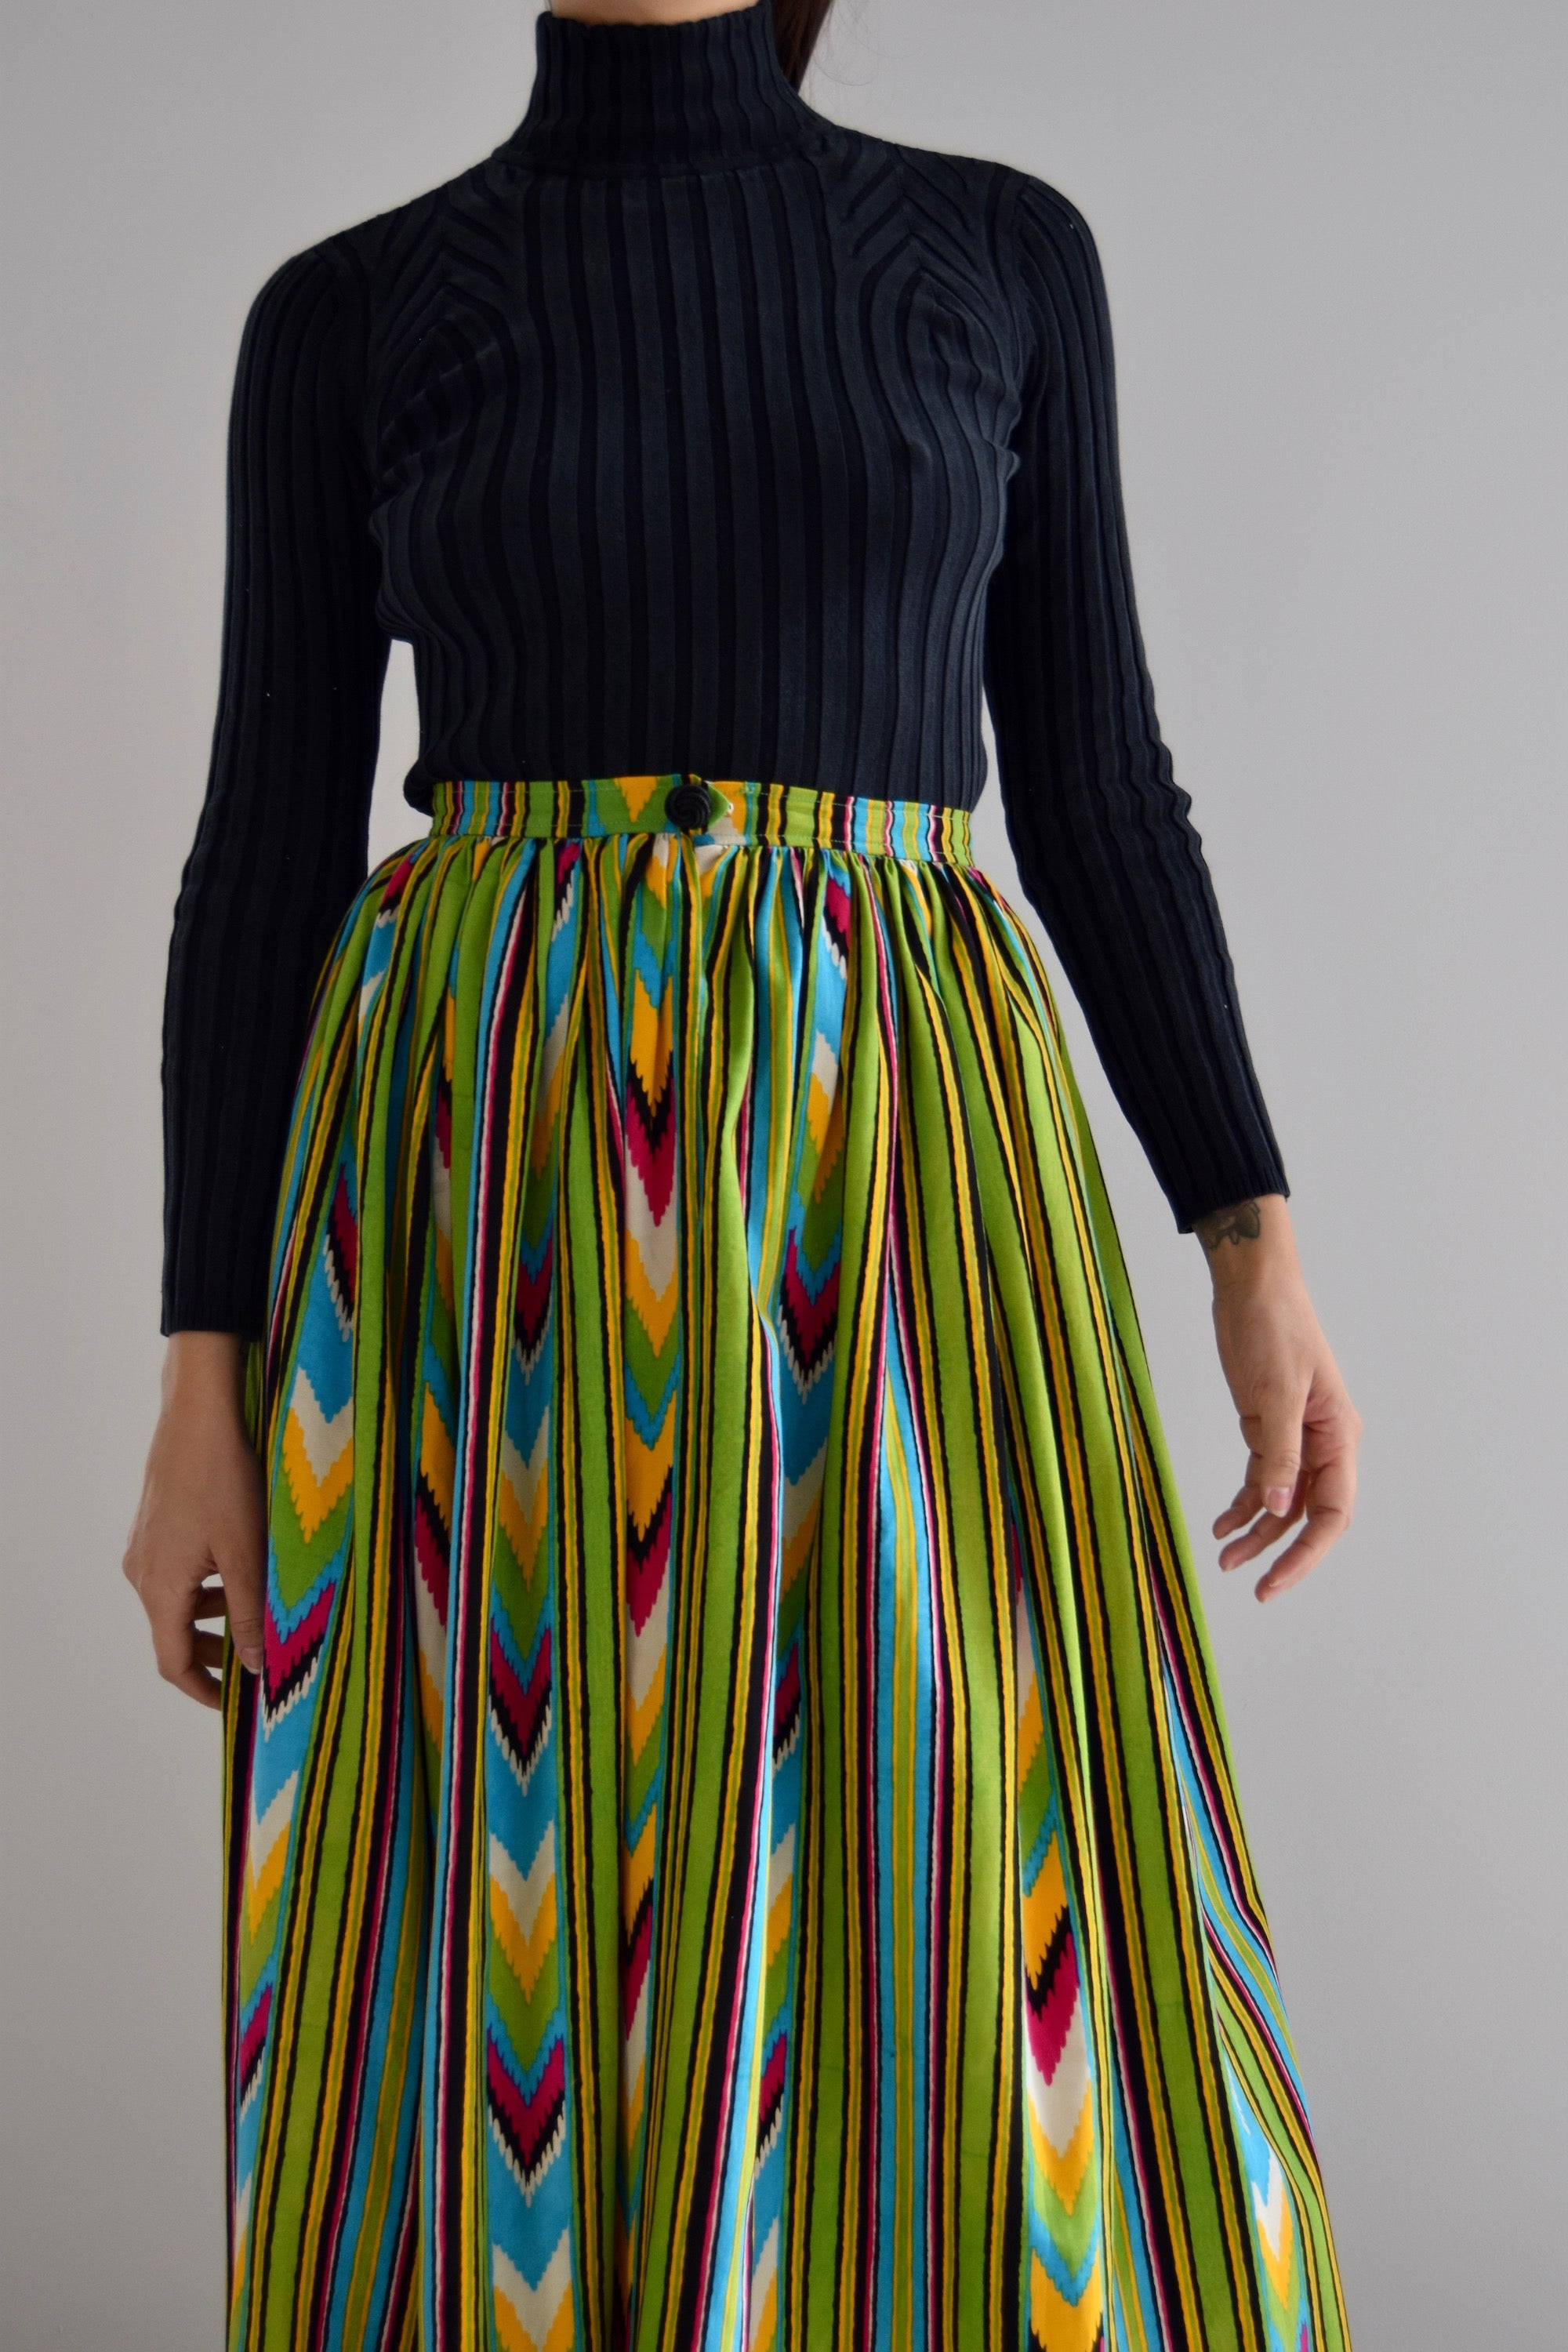 Vintage 70s Saint Laurent Vibrant Print Maxi Skirt